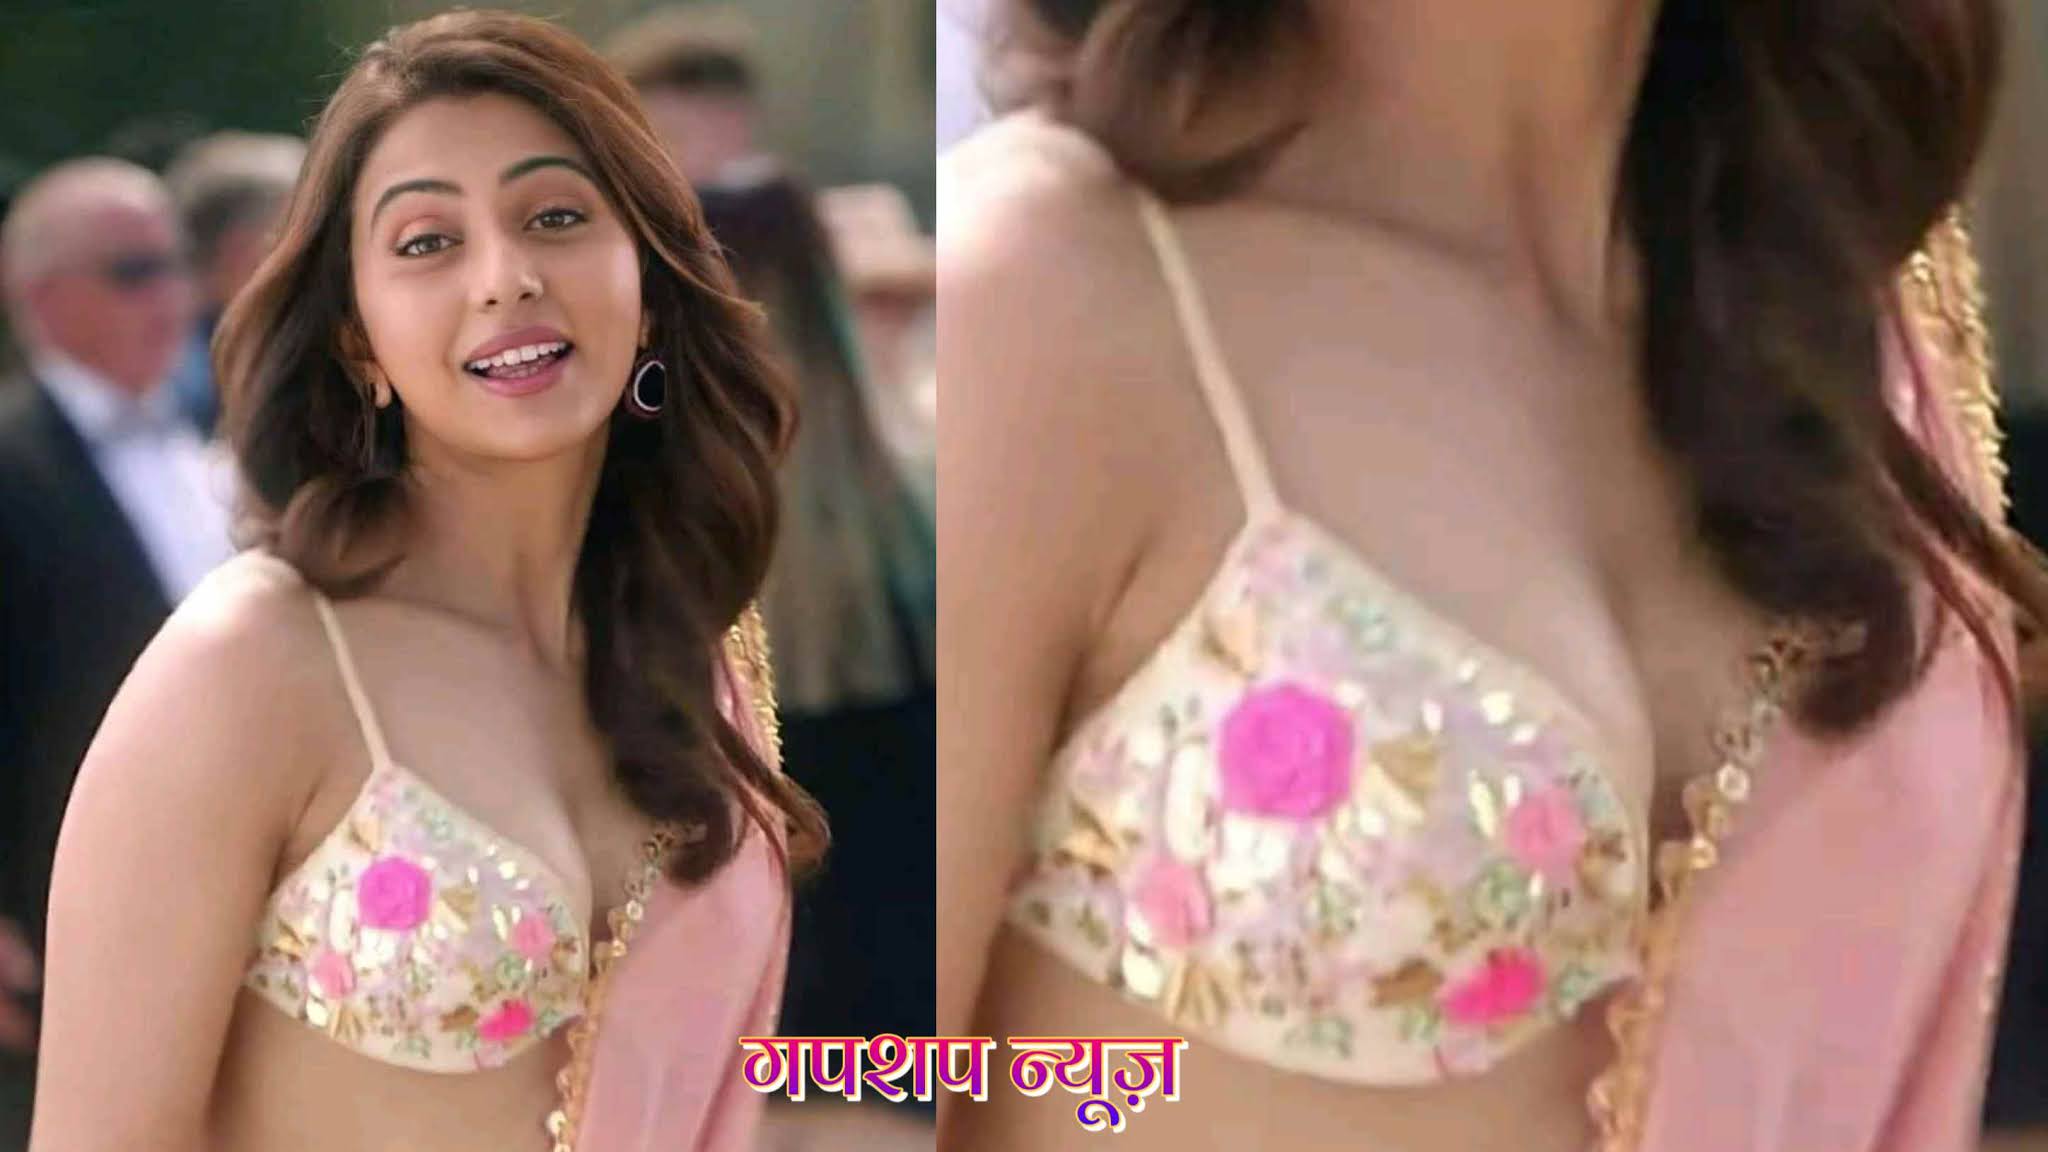 Bhojpuri Actress, Sexy Pics Of Bollywood, Gupshup News